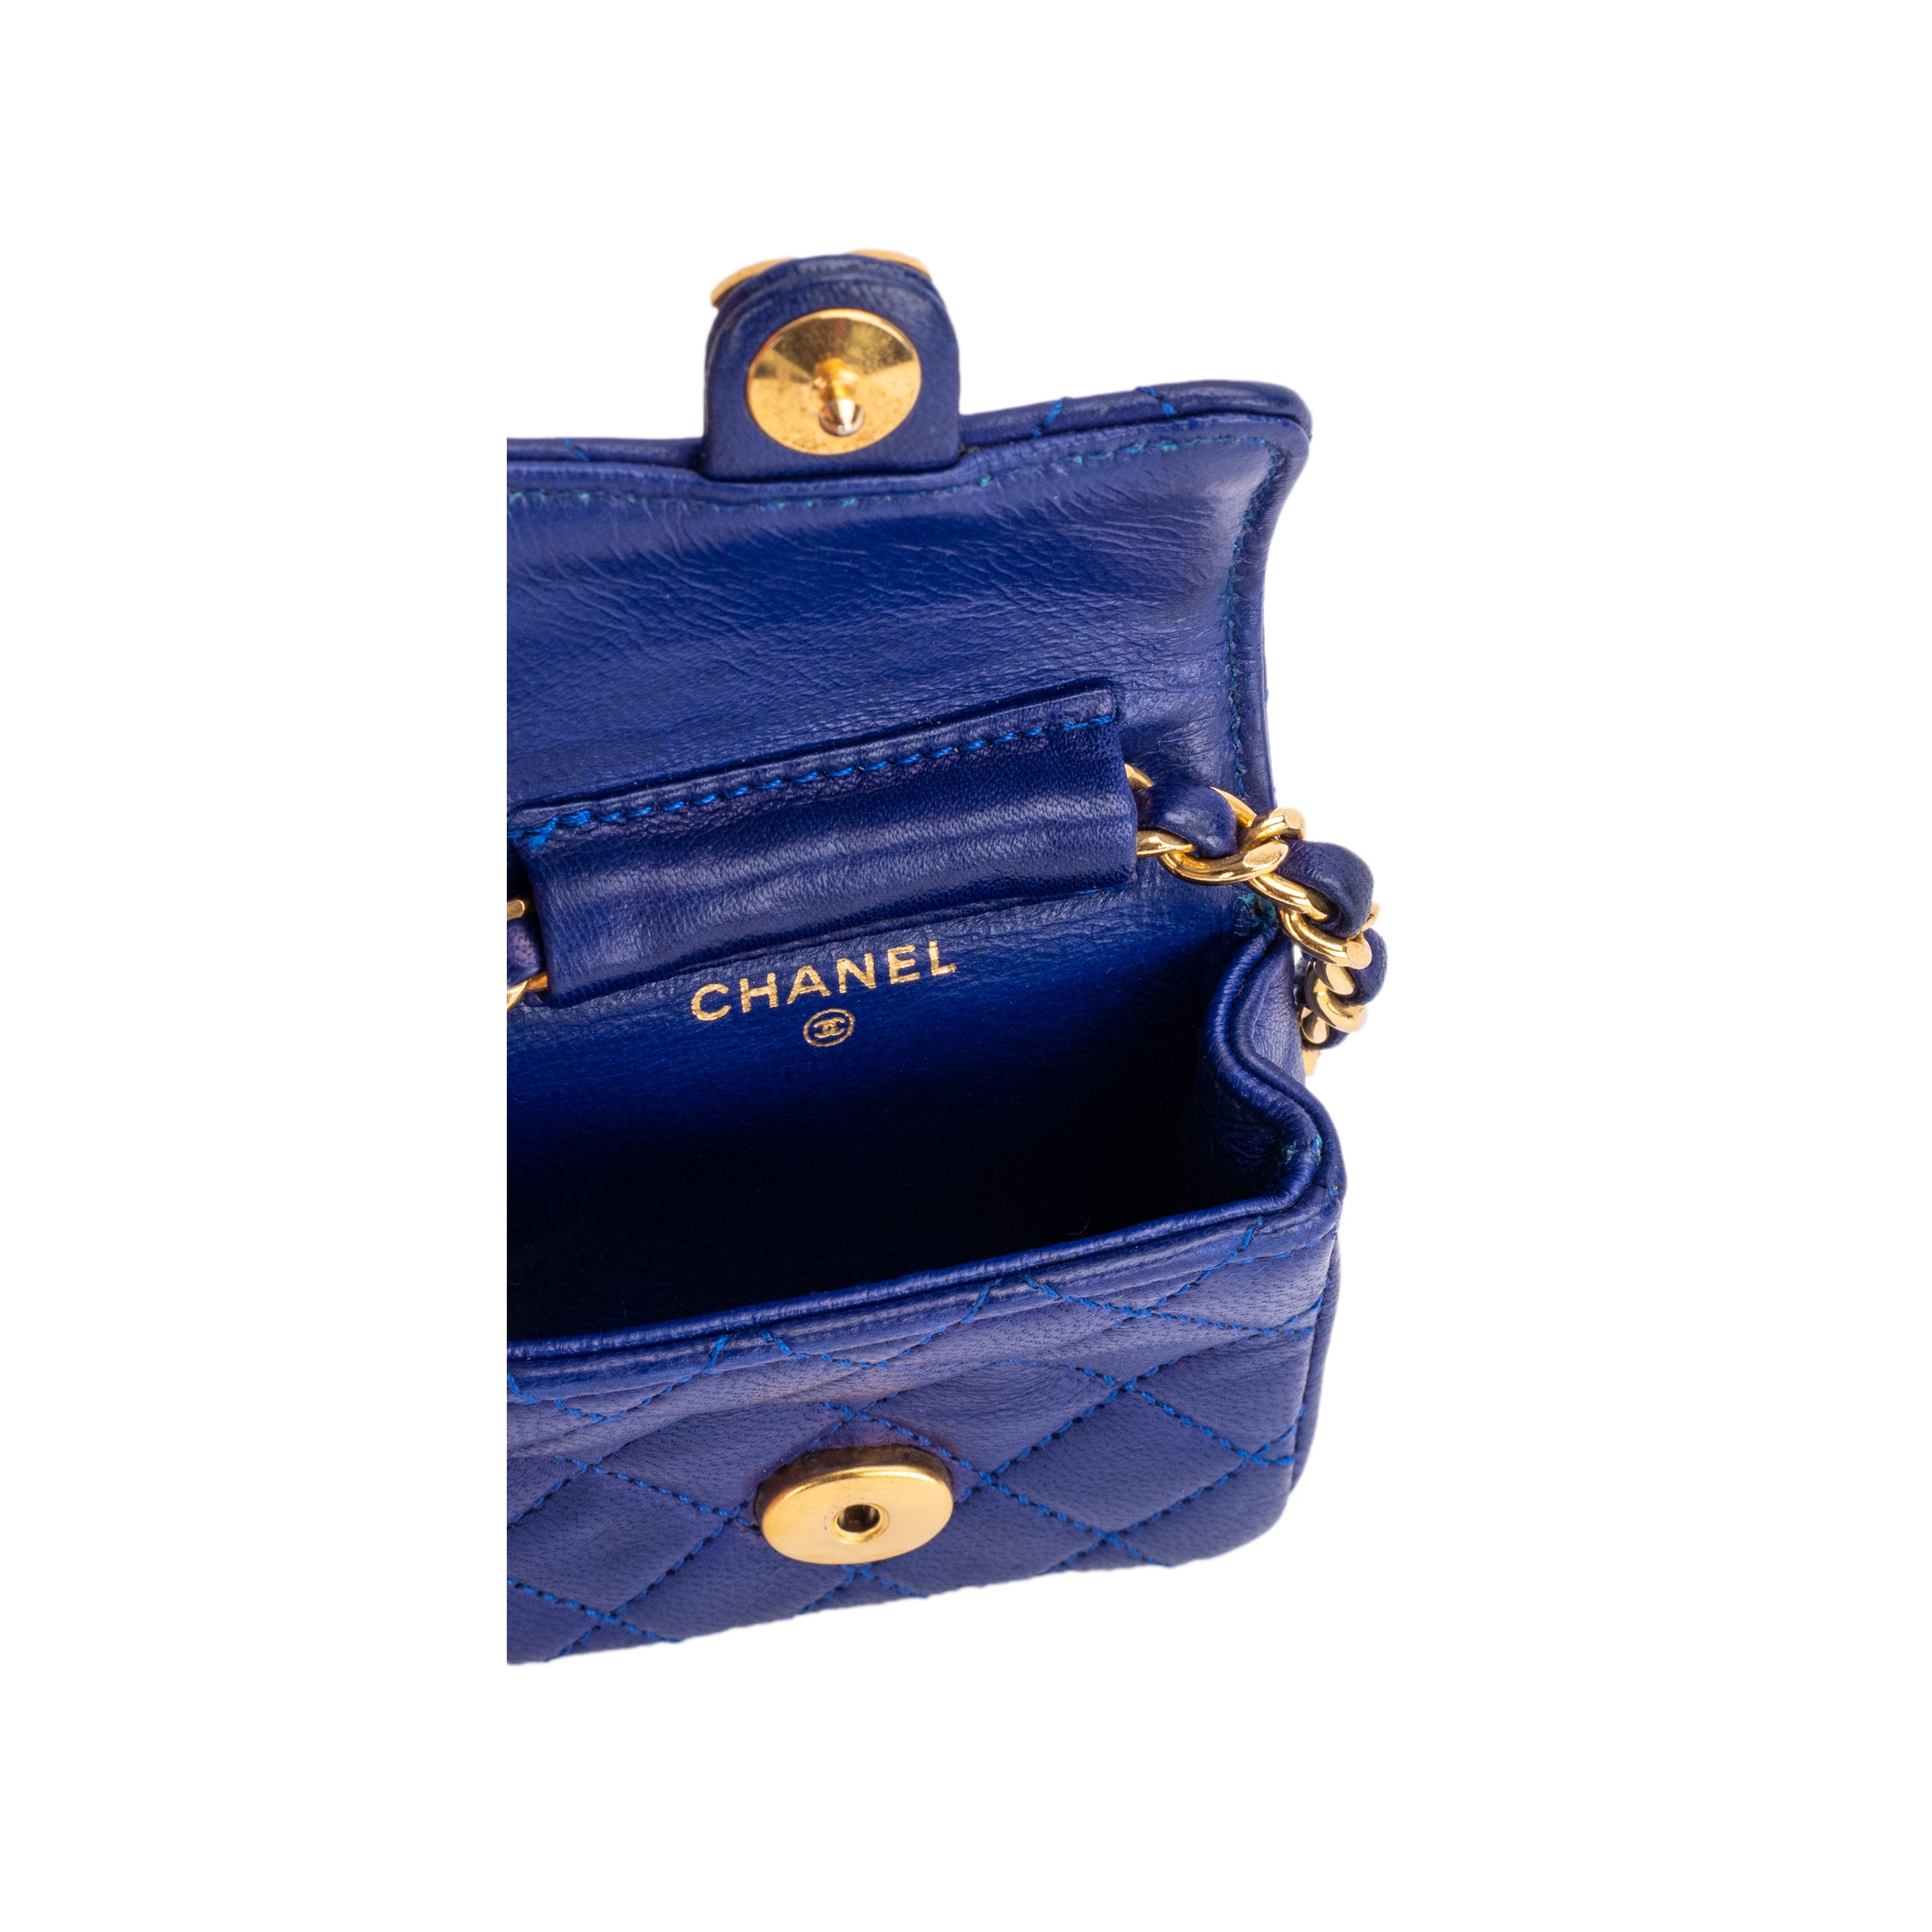 Chanel Blue Mini Flap Bag - '90s